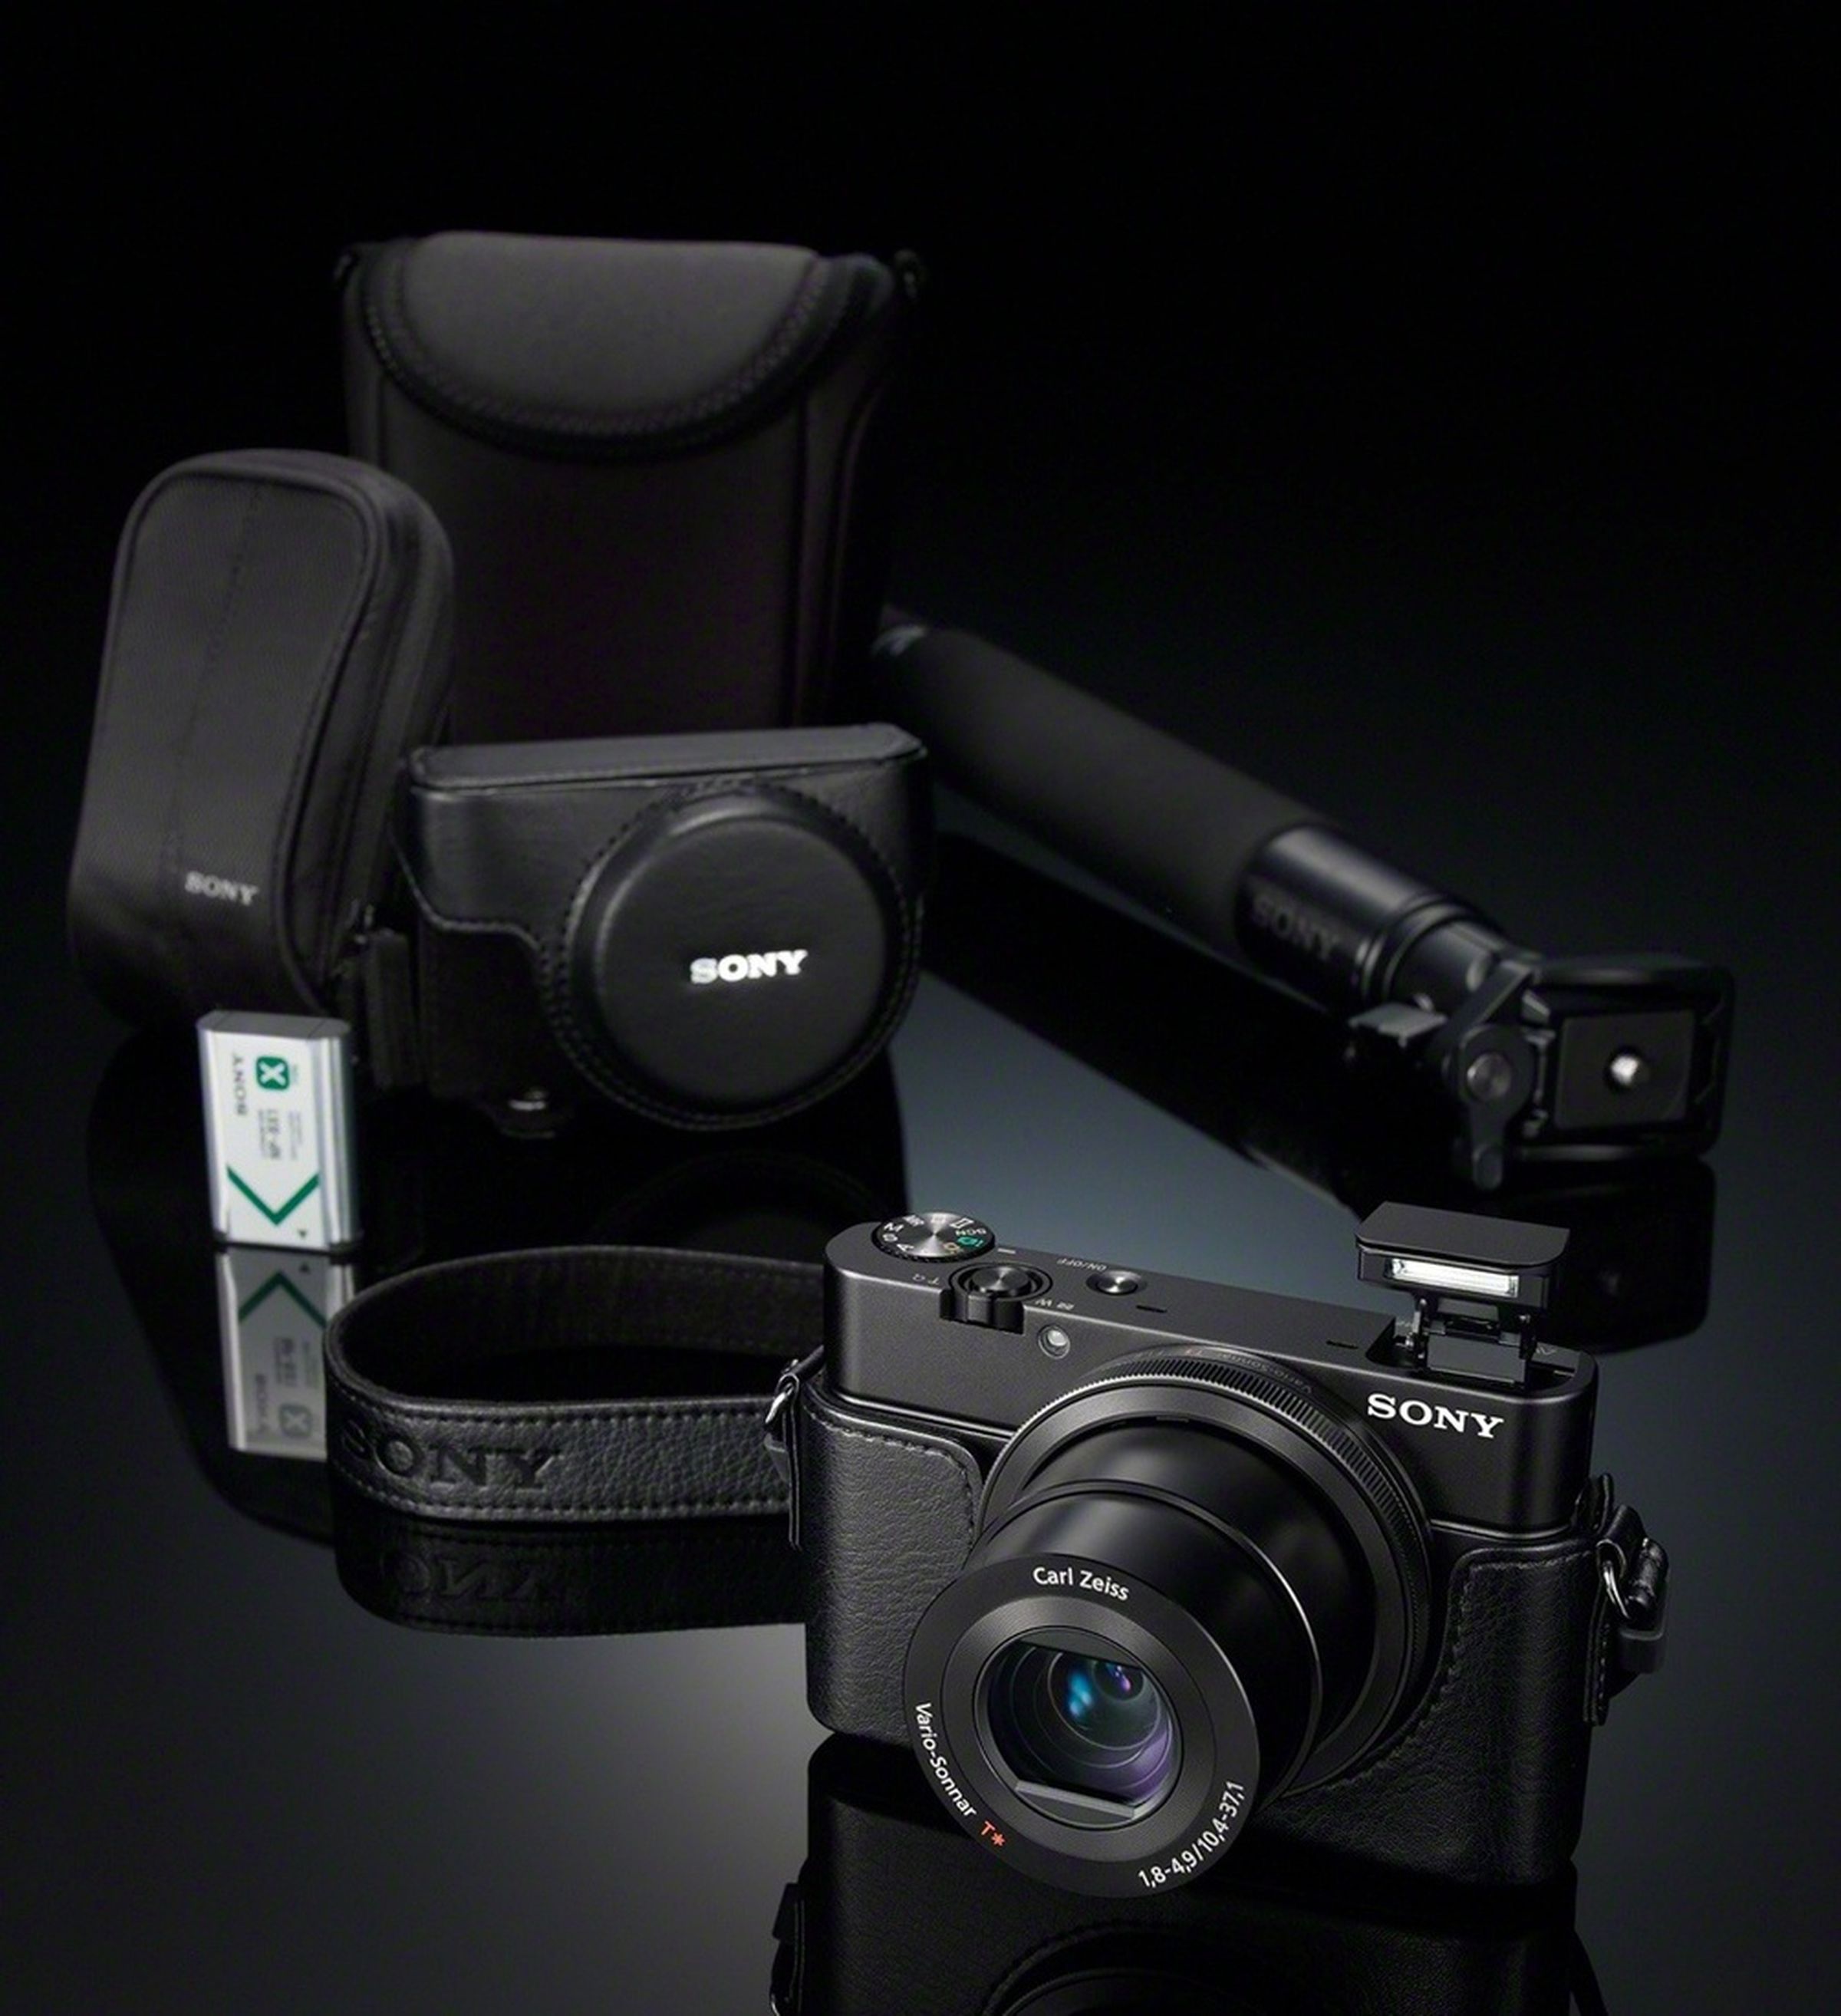 Sony Cyber-shot DSC-RX100 press photos